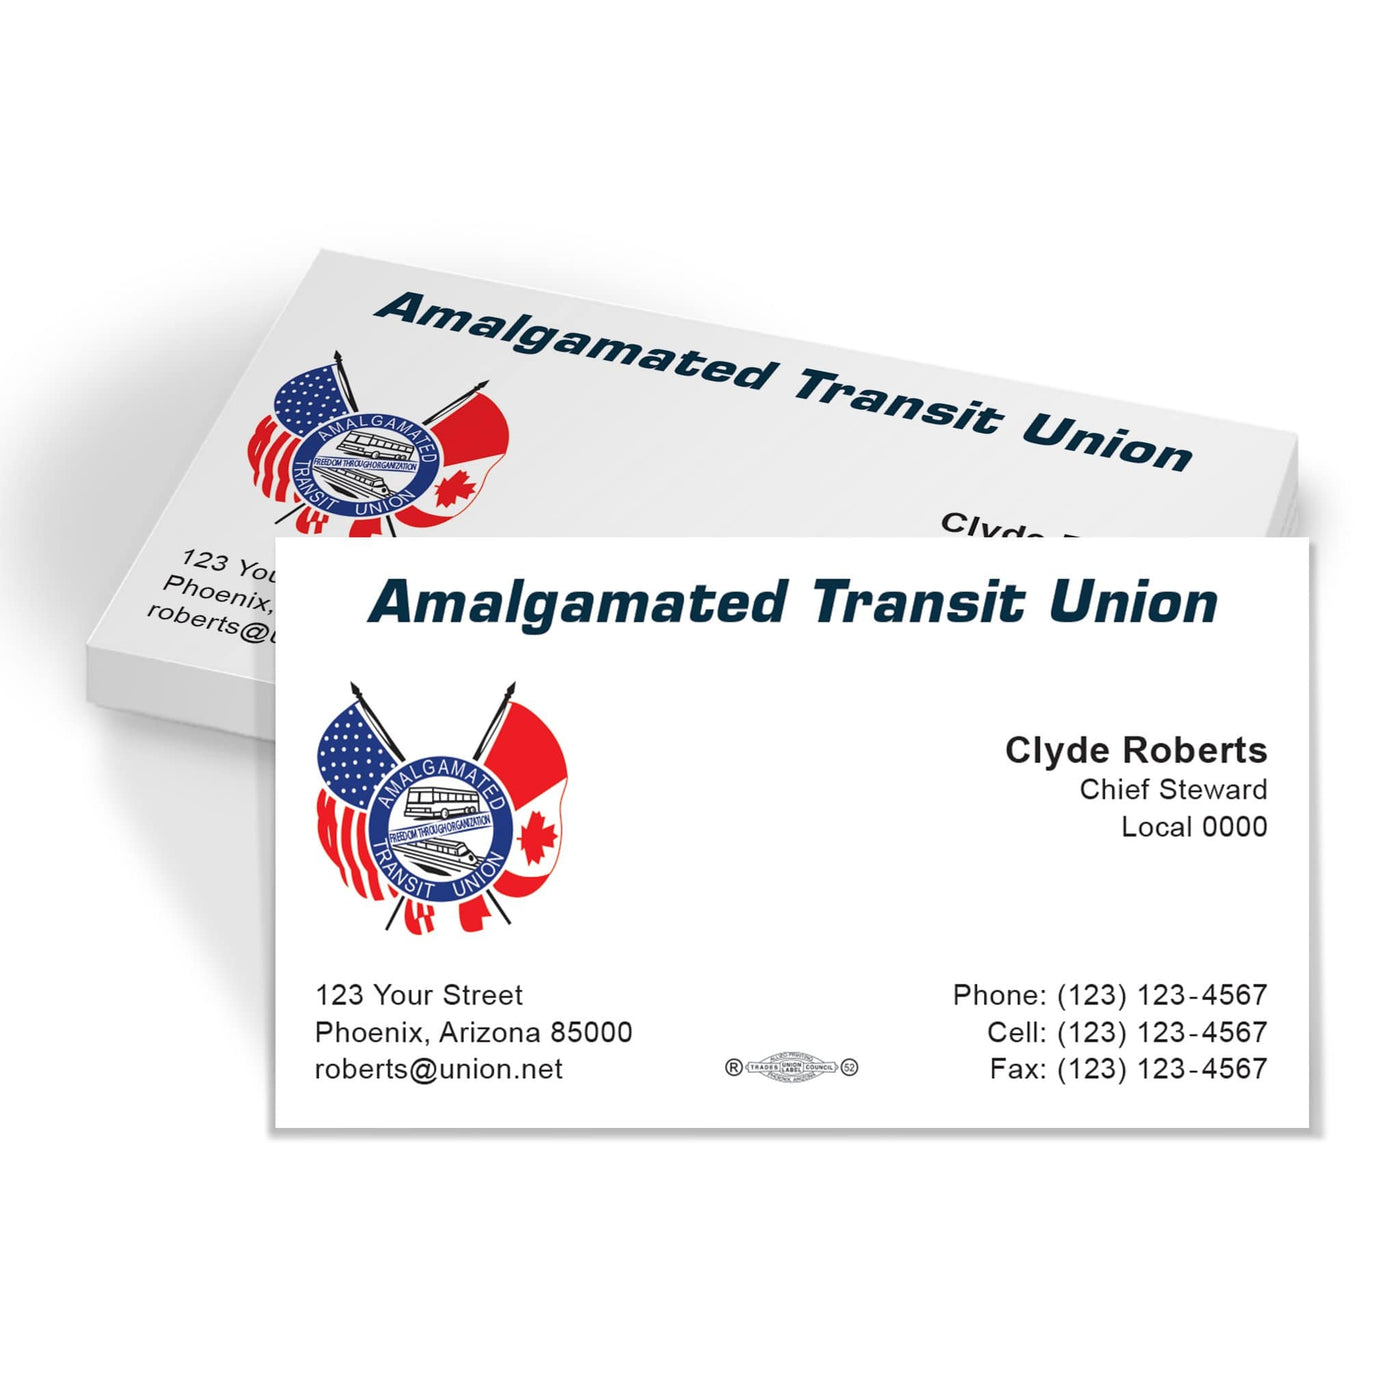 ATU Union Printed Business Cards - ATU-101